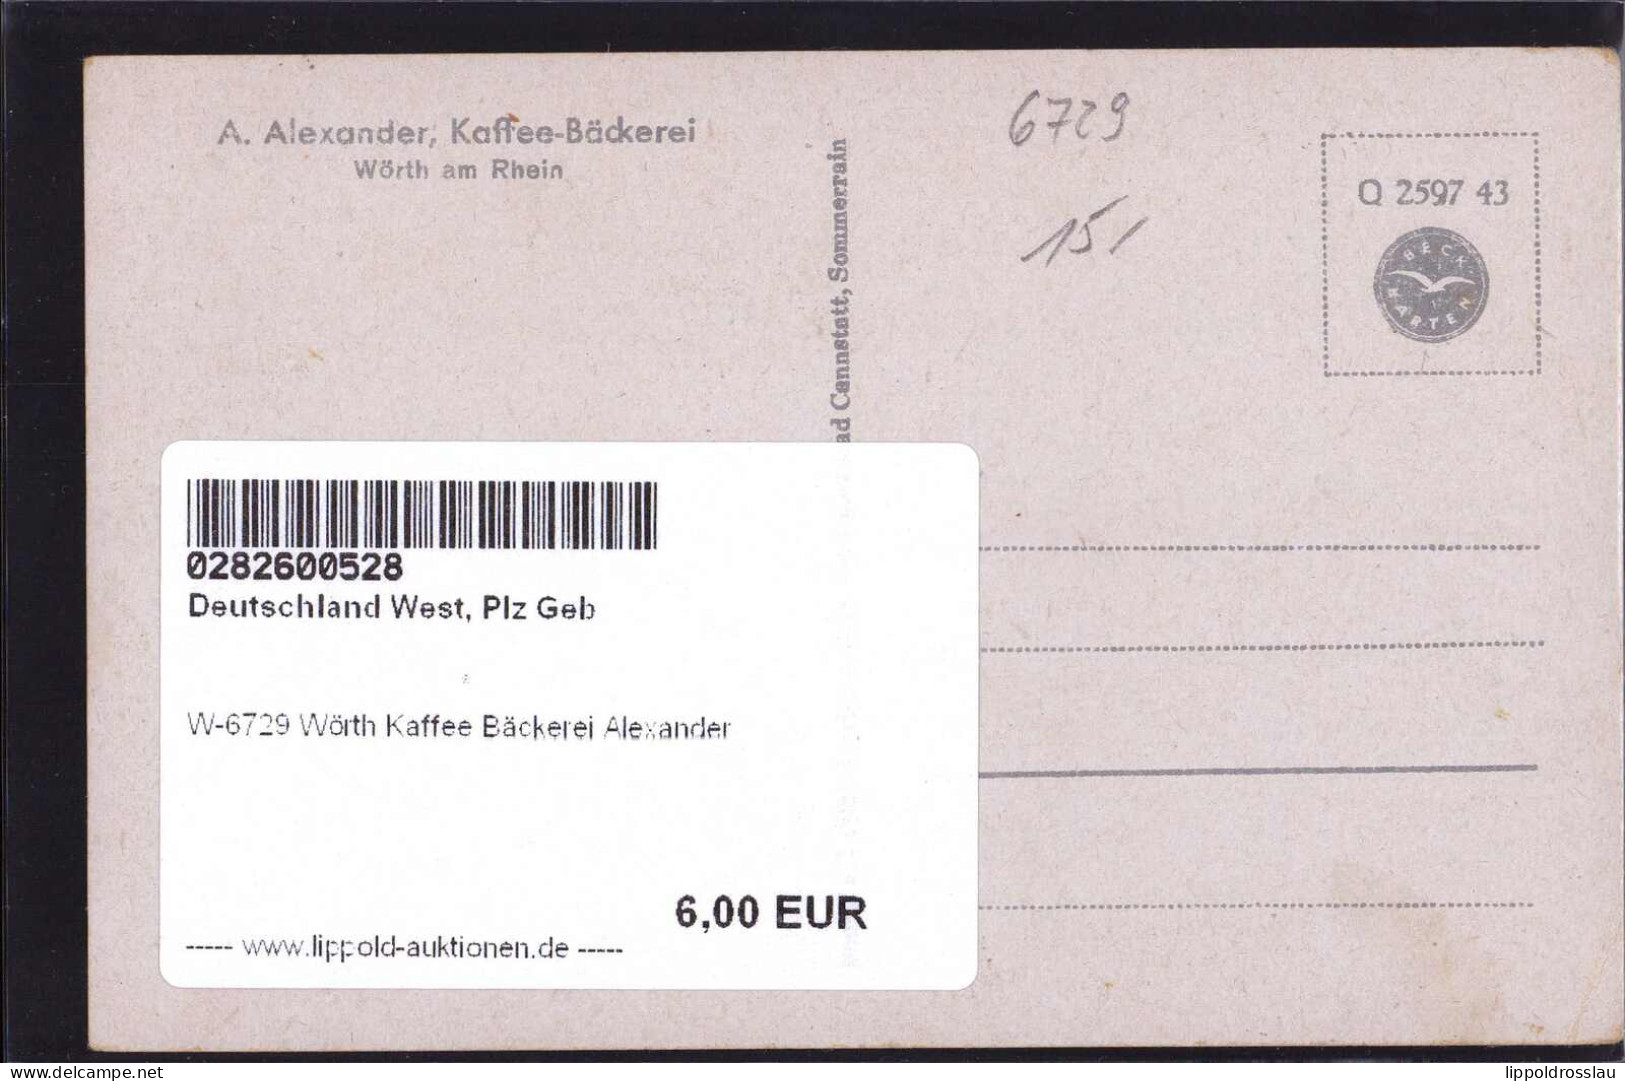 * W-6729 Wörth Kaffee Bäckerei Alexander - Speyer